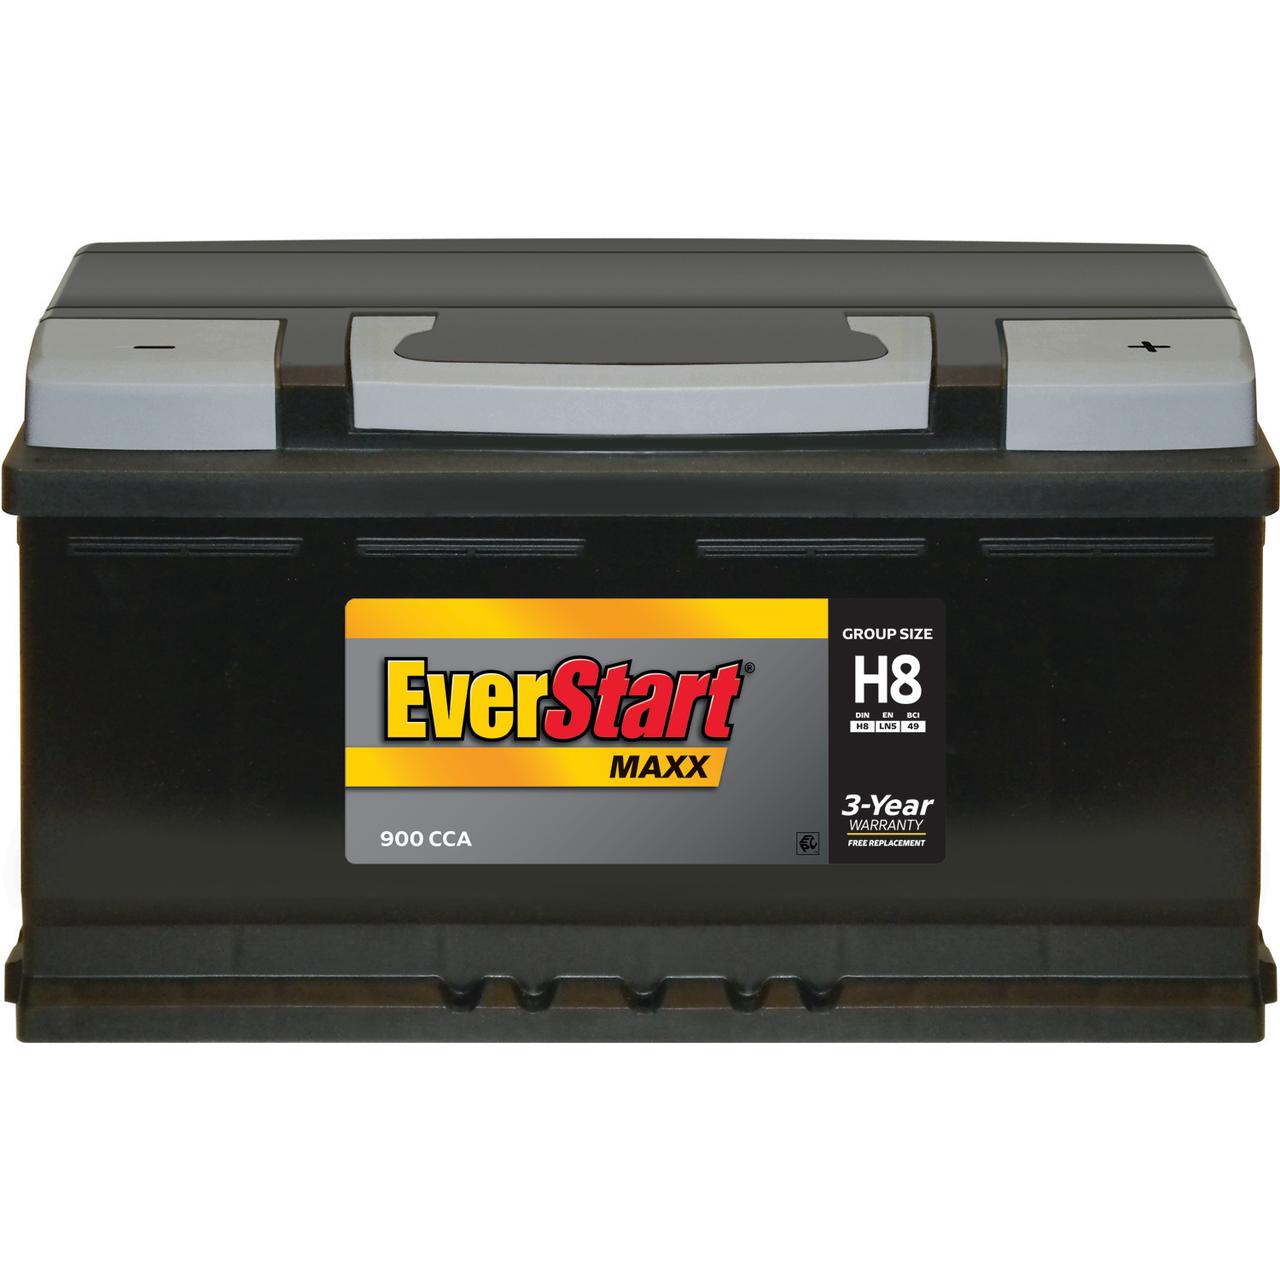 EverStart Maxx Lead Acid Automotive Battery, Group Size H8 / LN5 / 49 12 Volt, 900 CCA - image 3 of 7